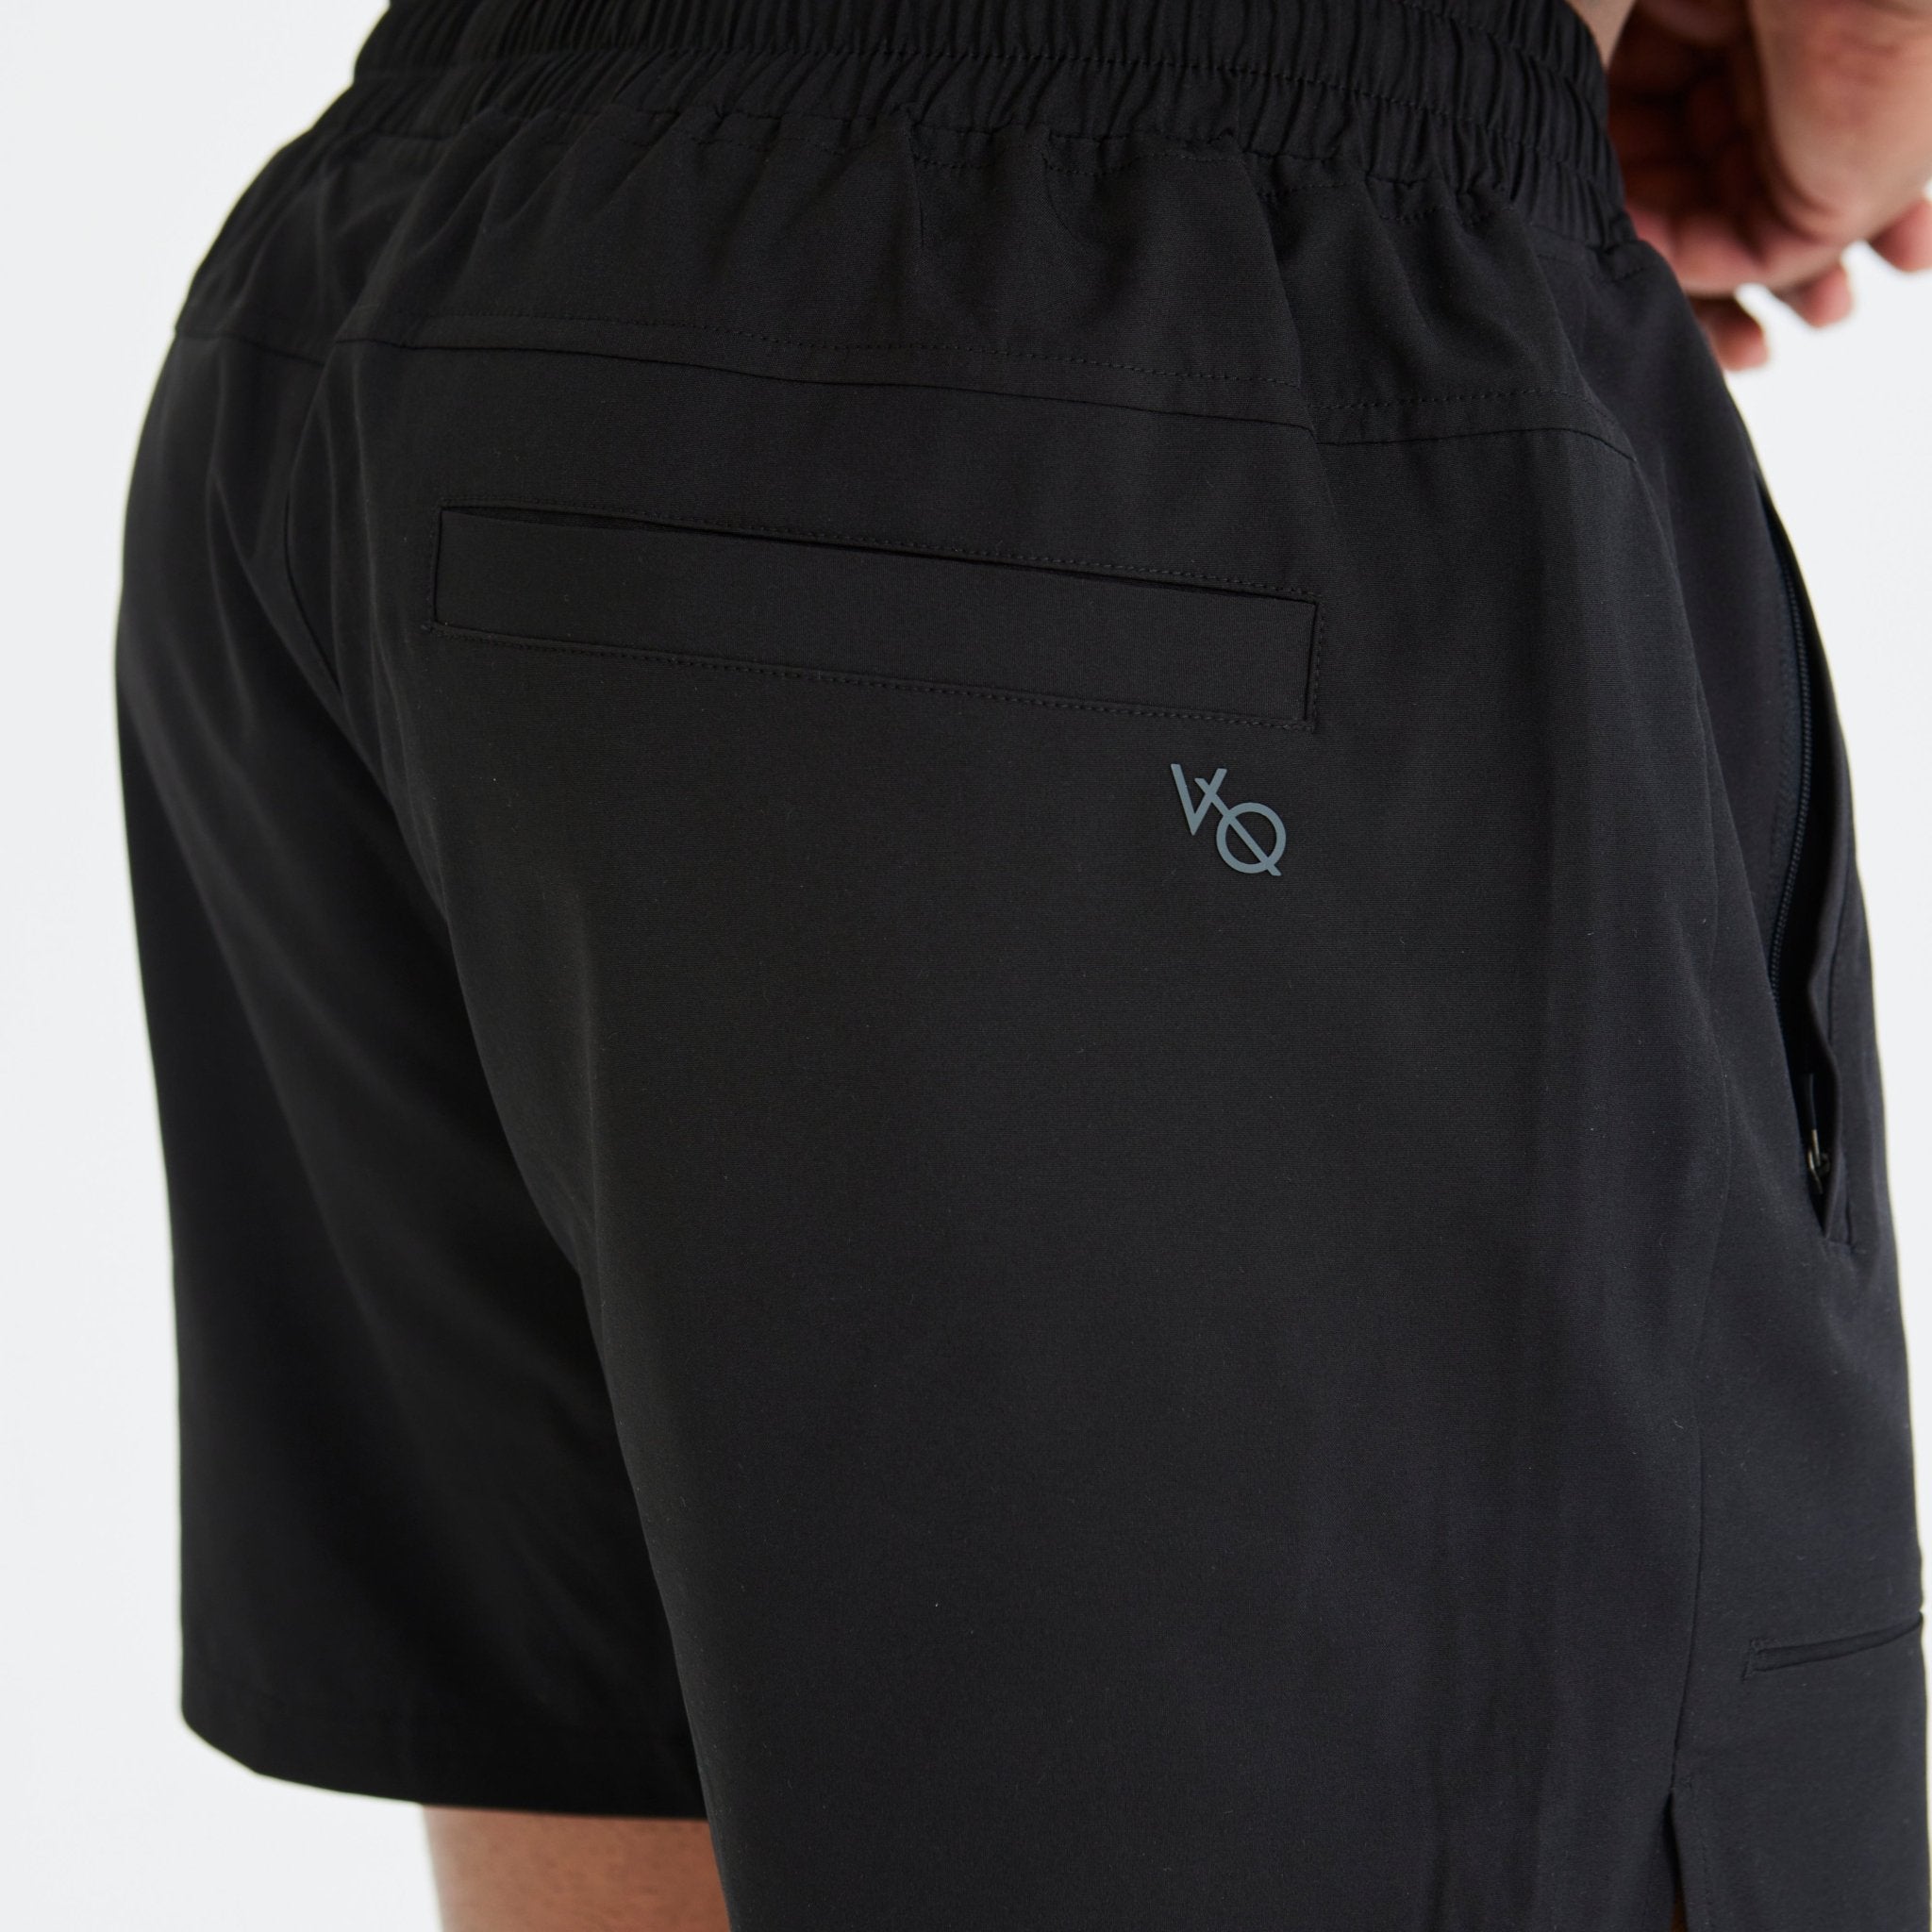 Vanquish Utility V3 Black 4" Shorts - Vanquish Fitness